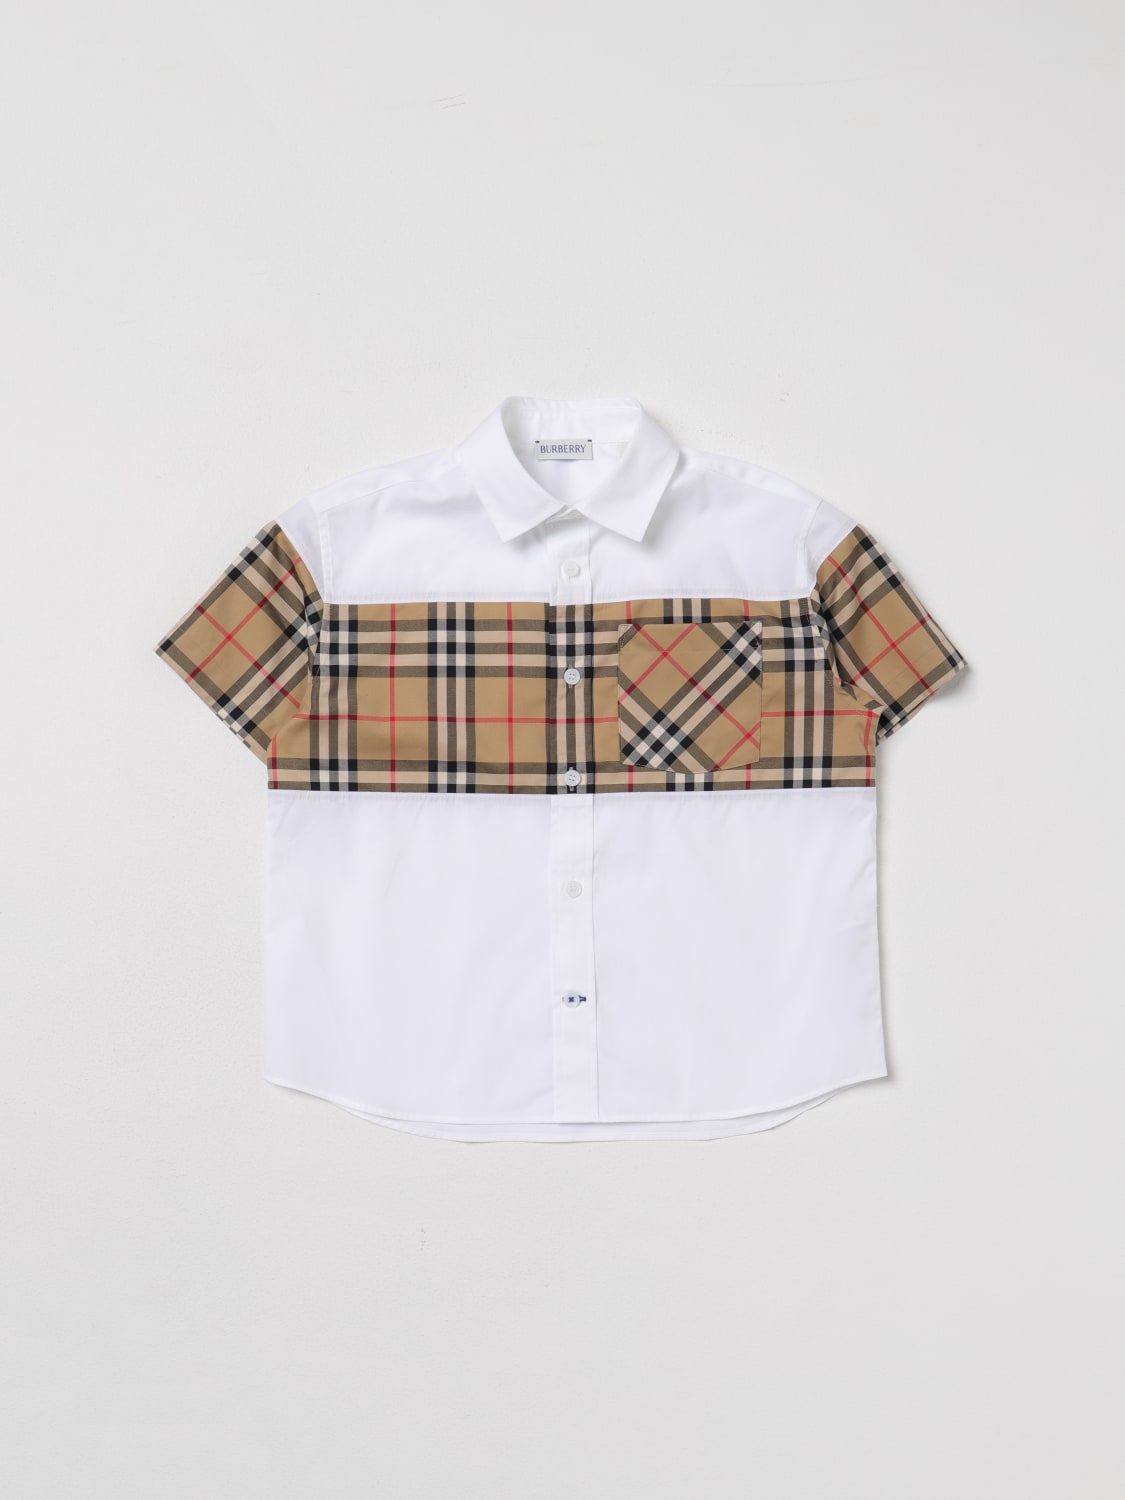 Kids Burberry Dress Shirt Flash Sales | website.jkuat.ac.ke